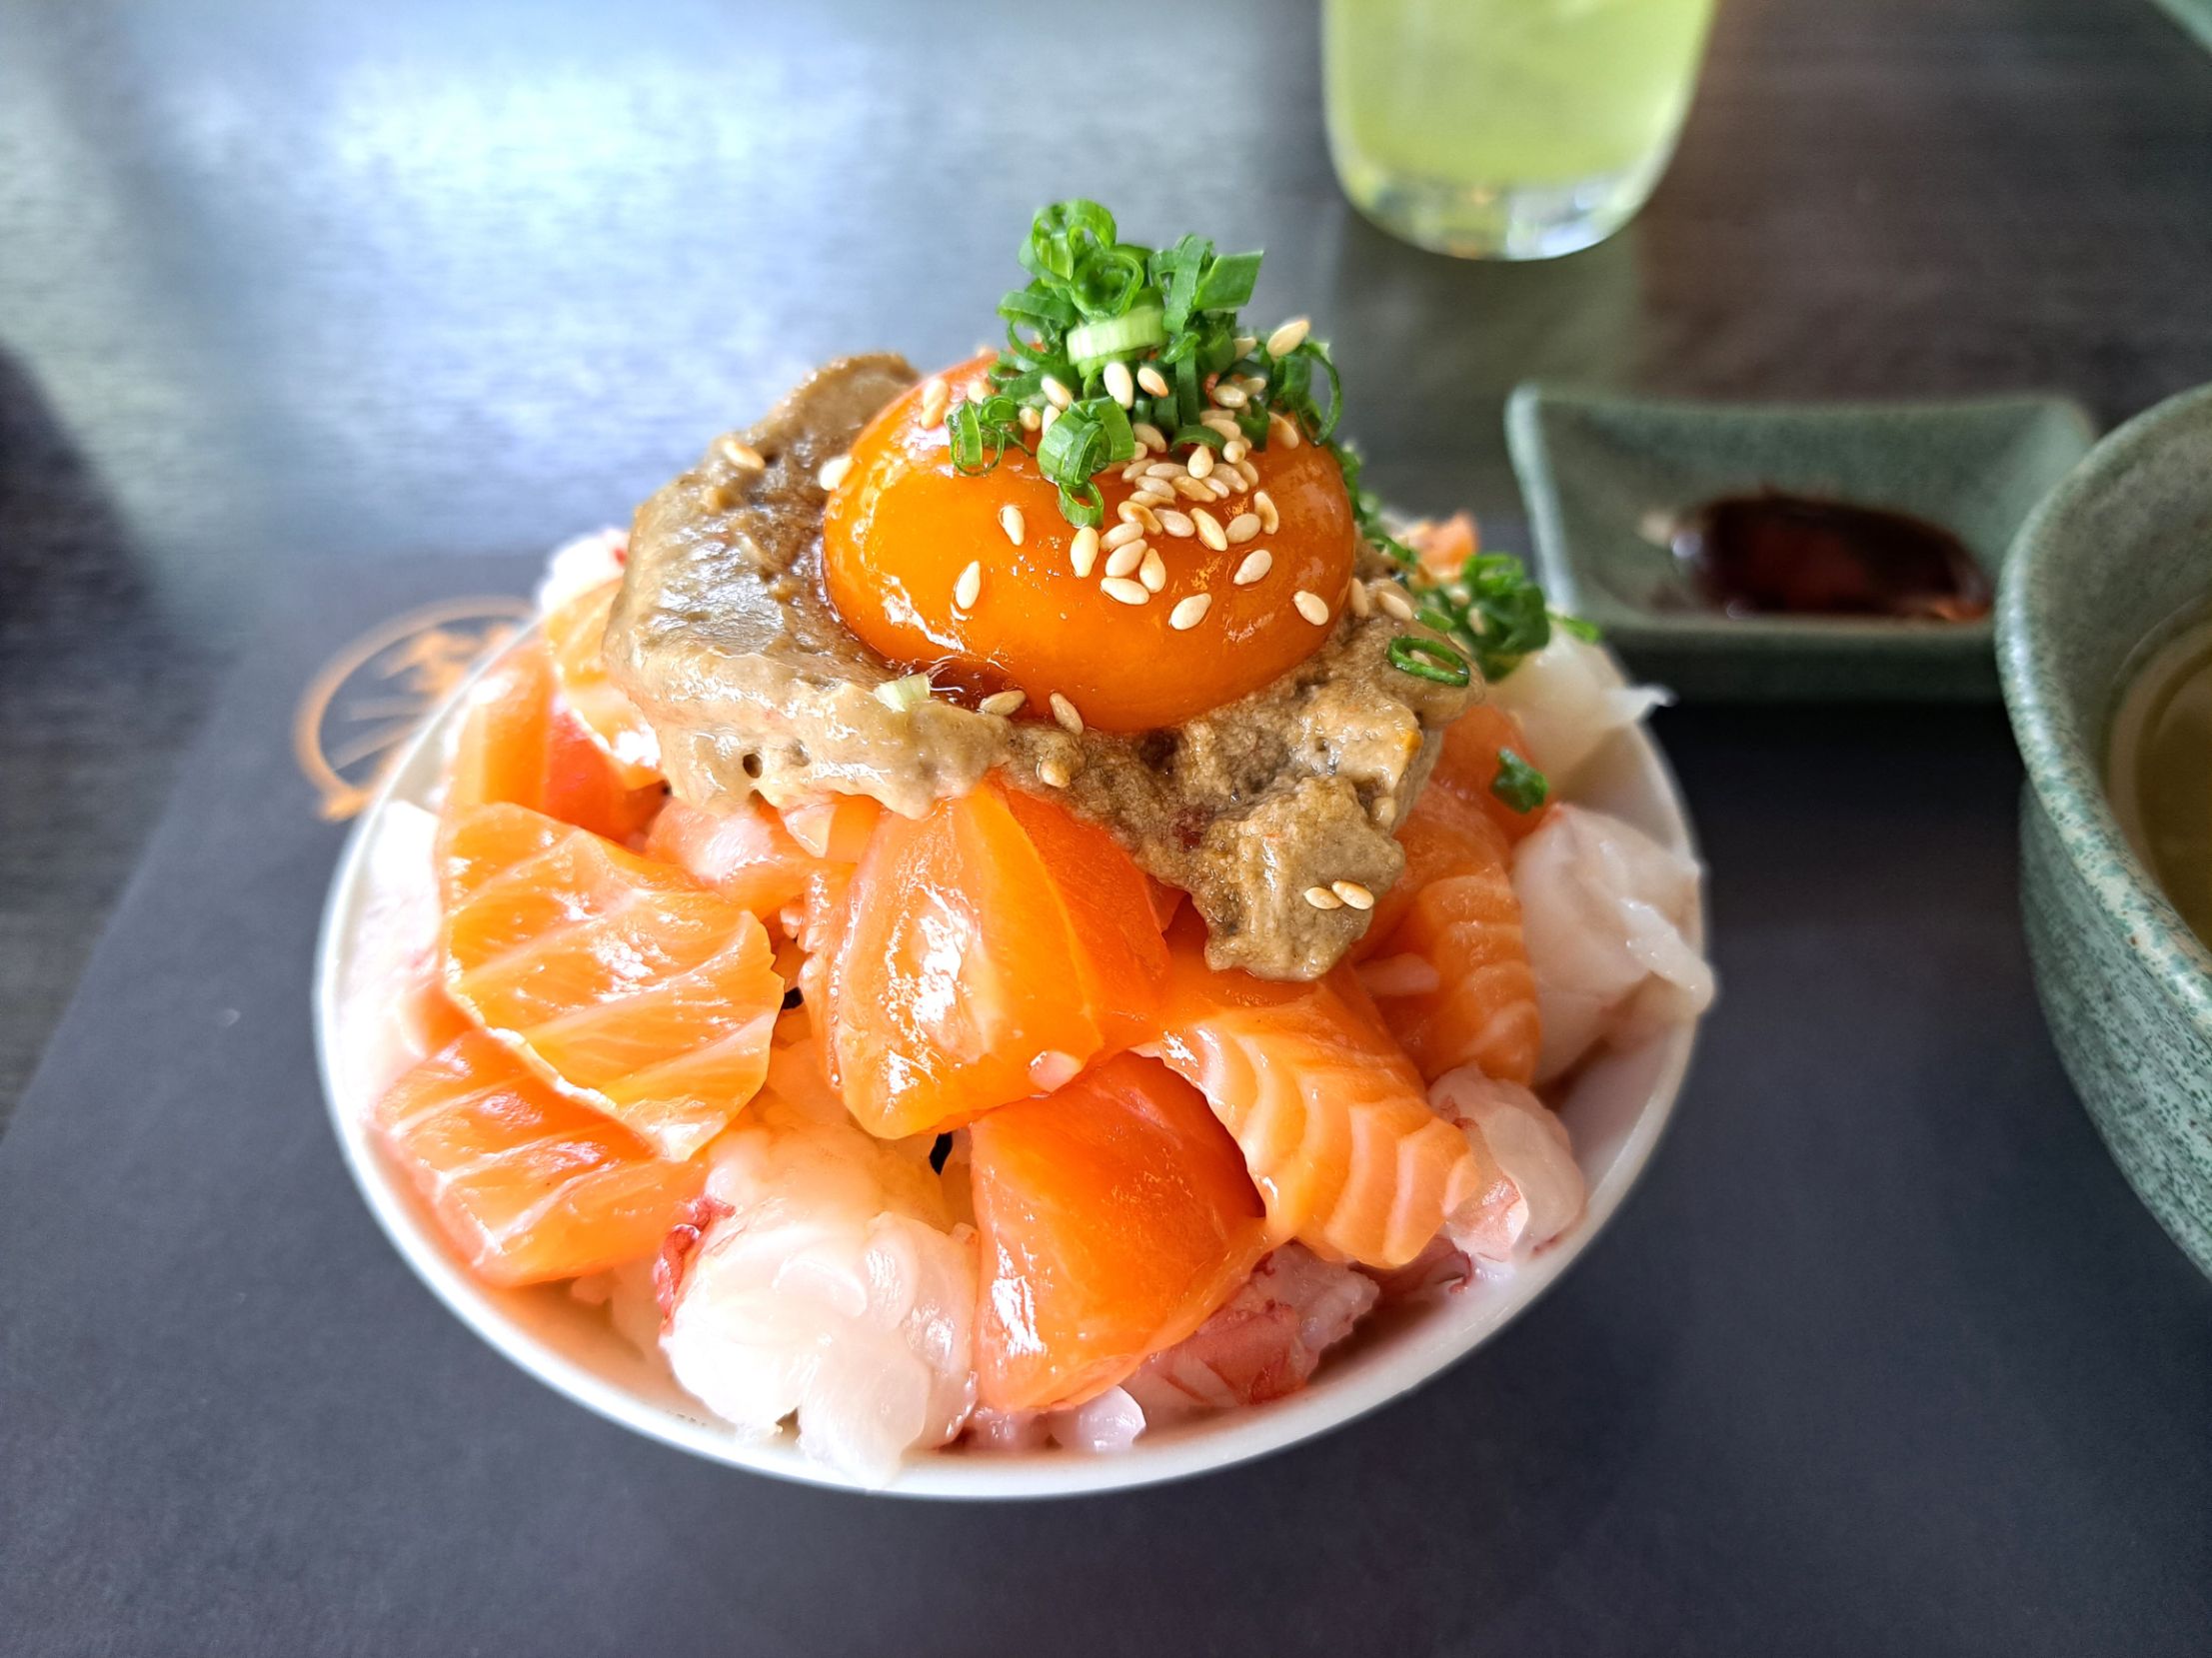 Hashi restaurantで贅沢な海鮮丼【タイ・ハジャイ】